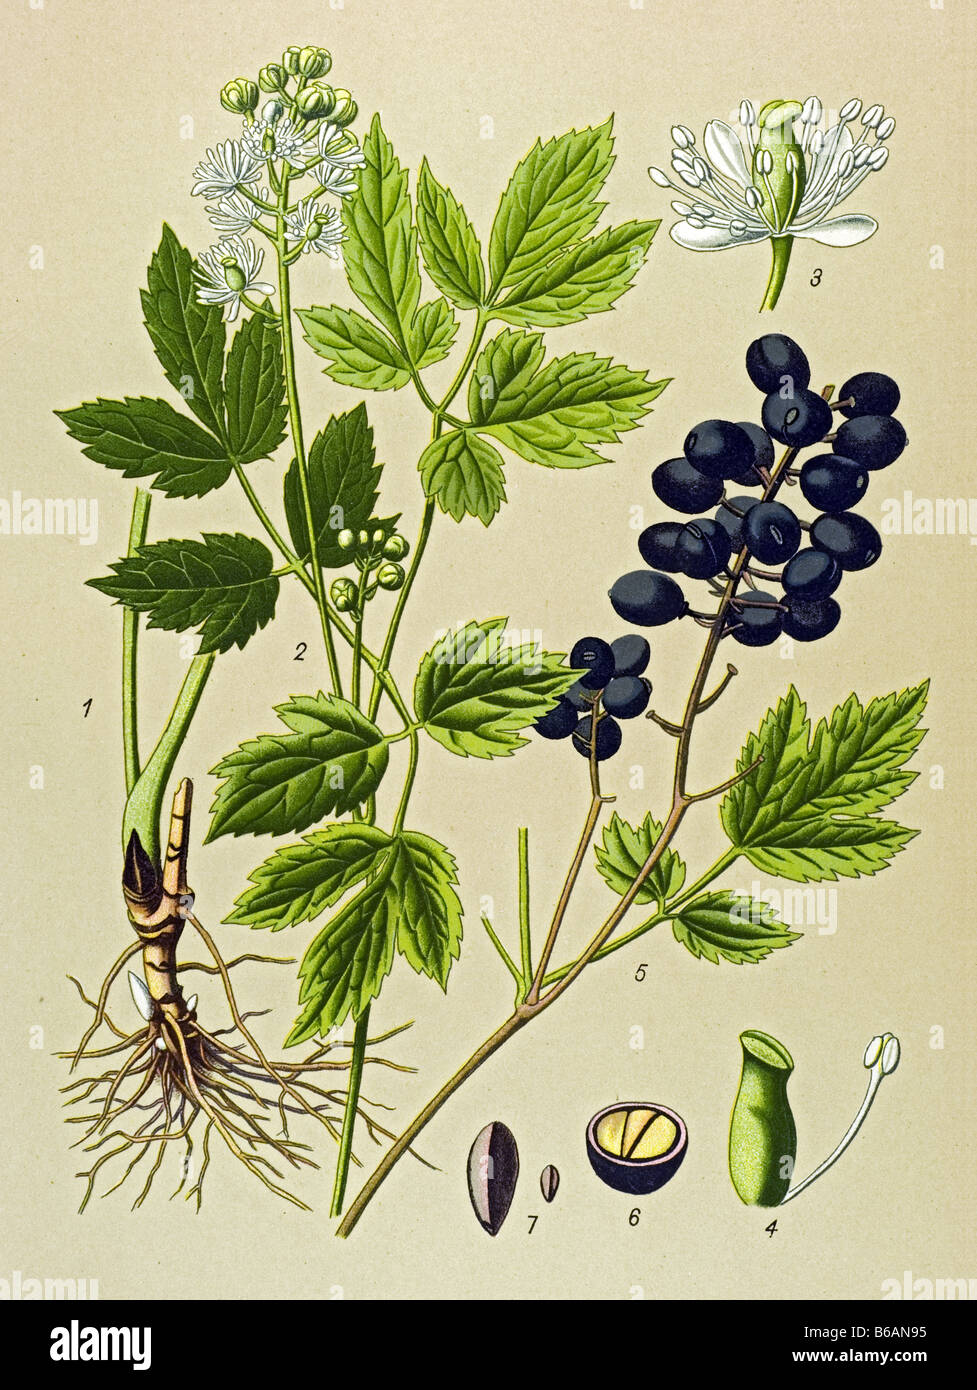 Baneberry, Actaea spicata poisonous plants illustrations Stock Photo